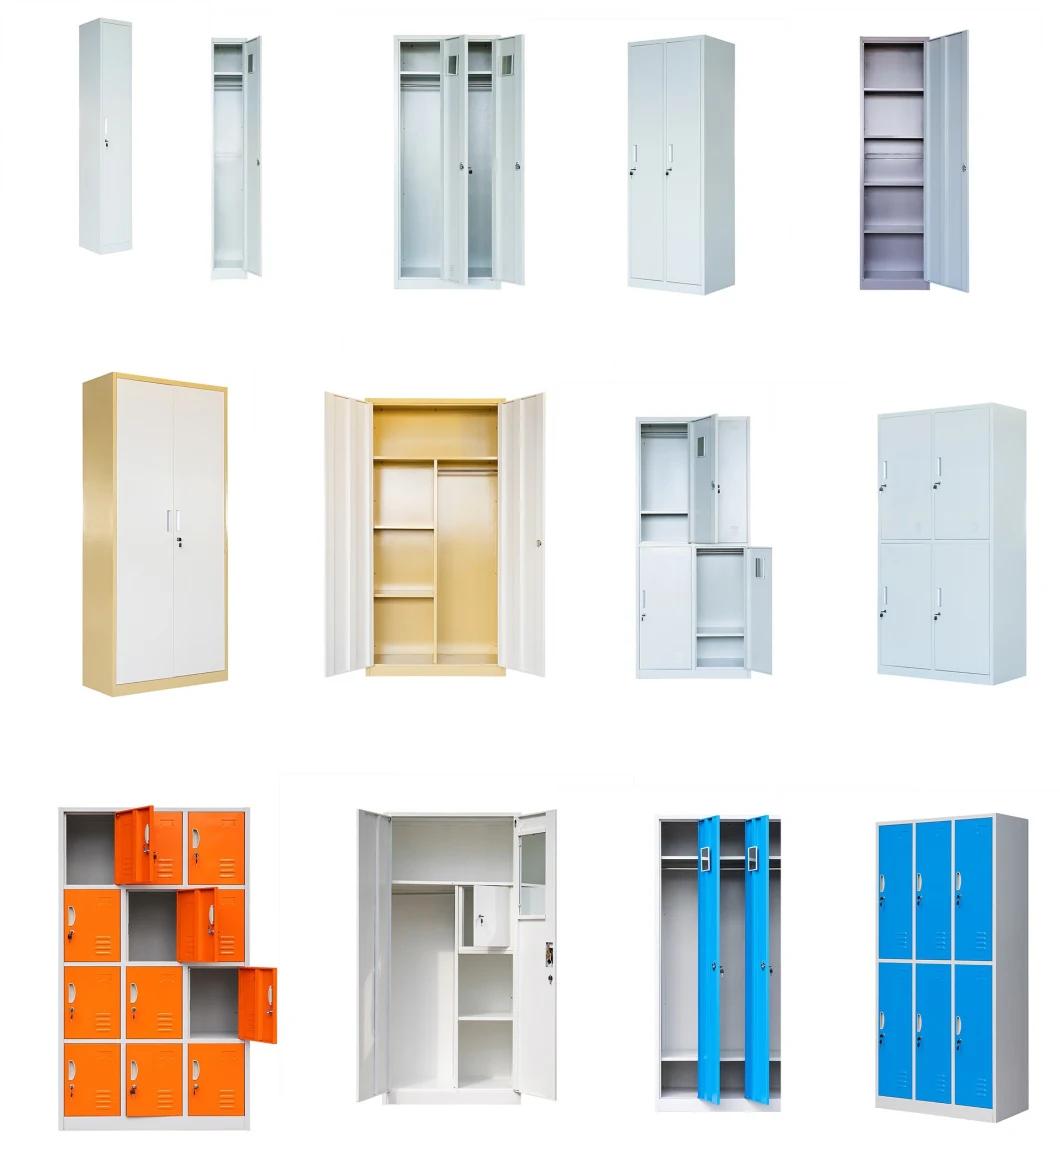 Commercial Compact Dense Racks Shelves Professional Manufacturers